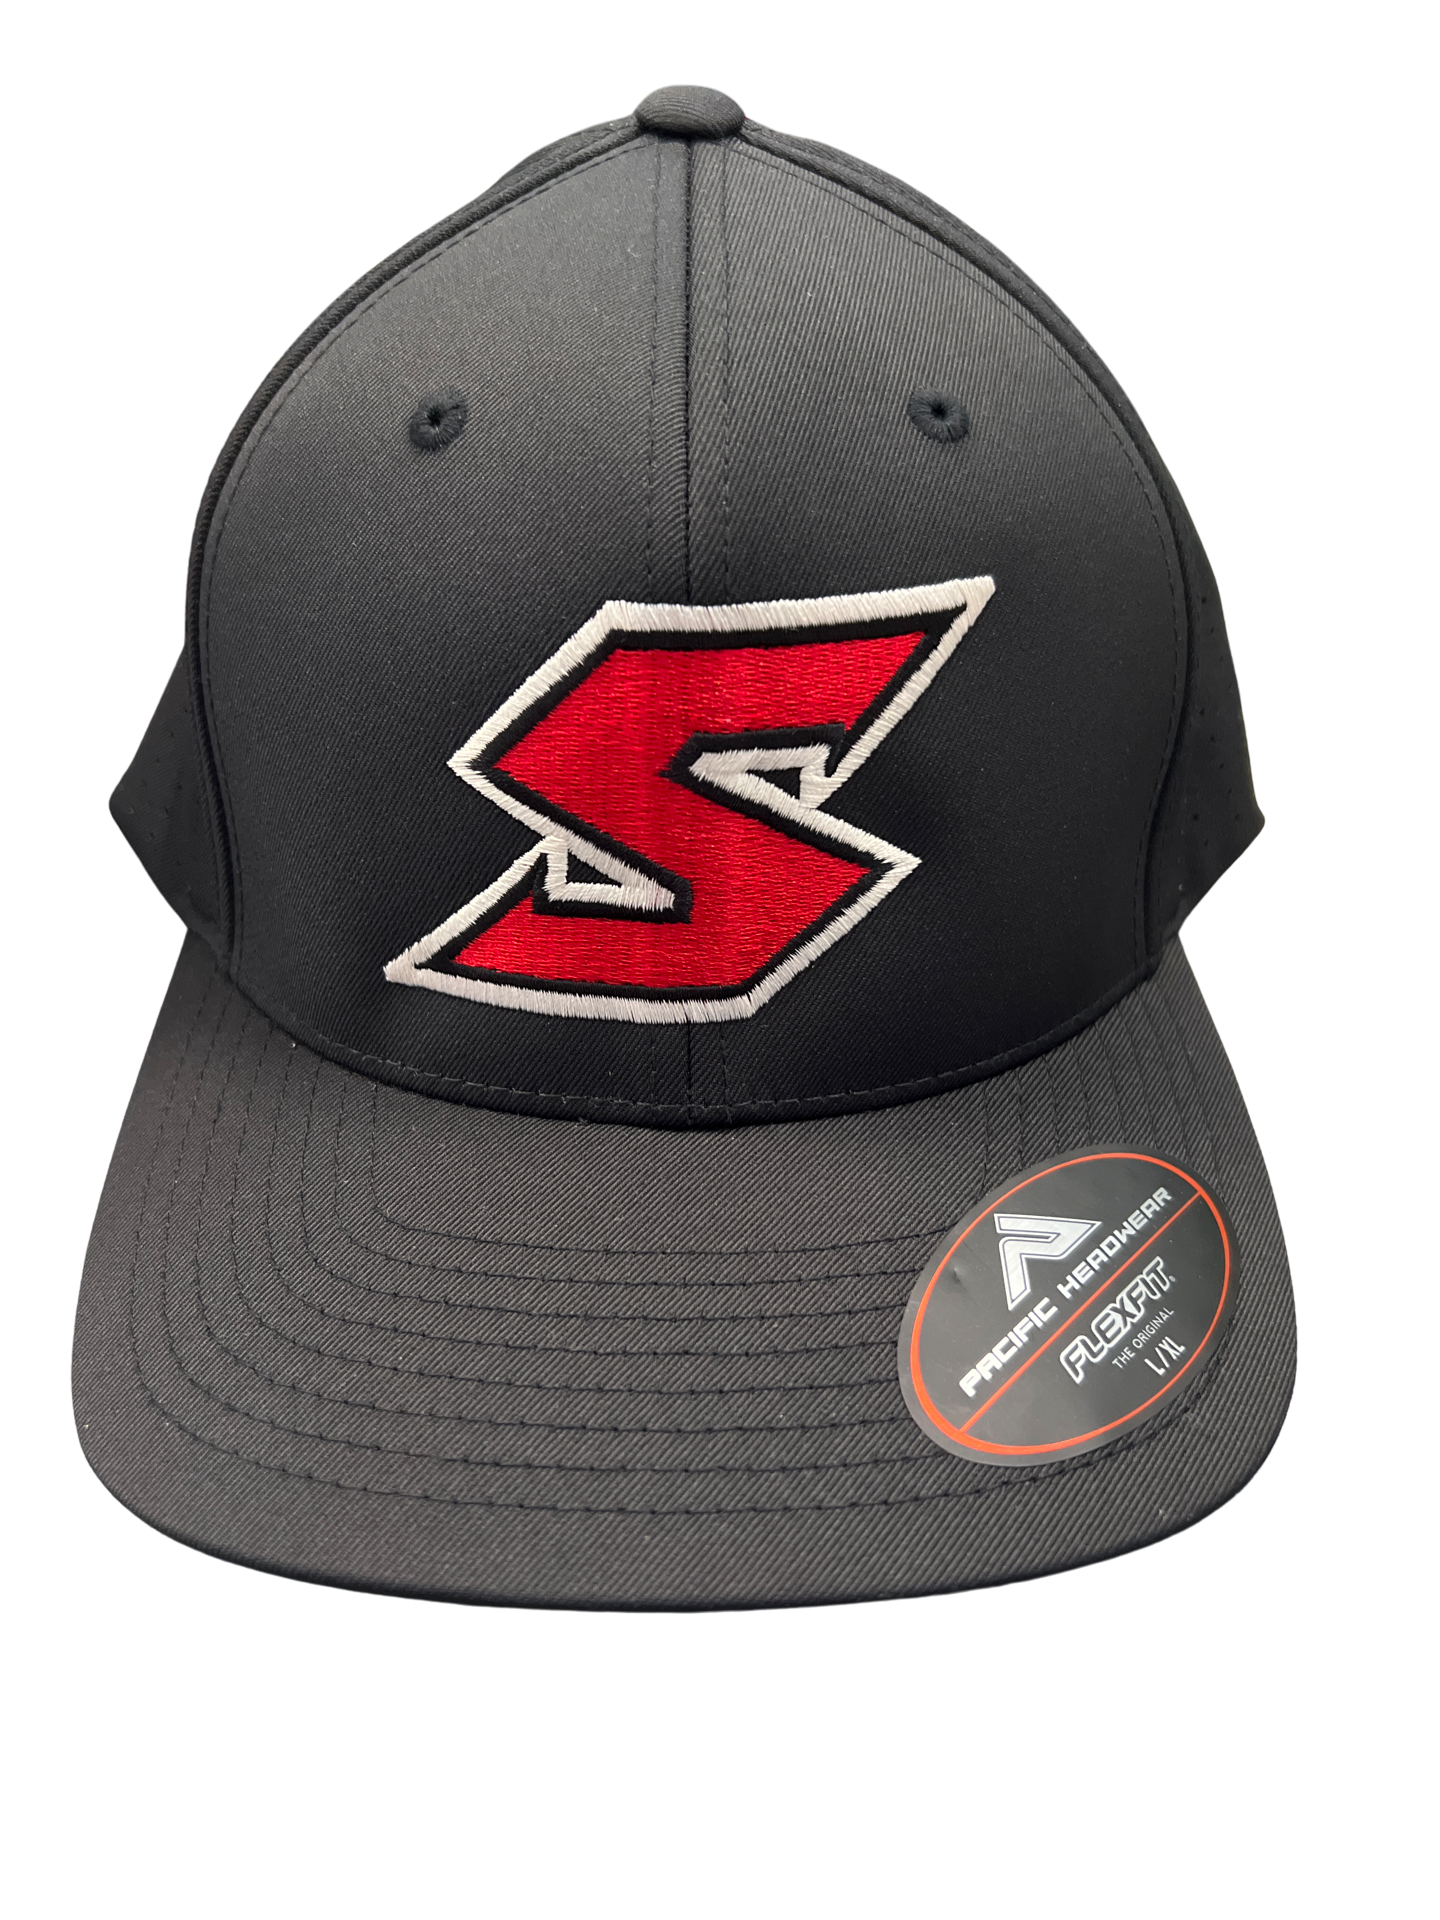 Softball Black/Red Flexfit 474 S Suncoast Hat - Suncoast